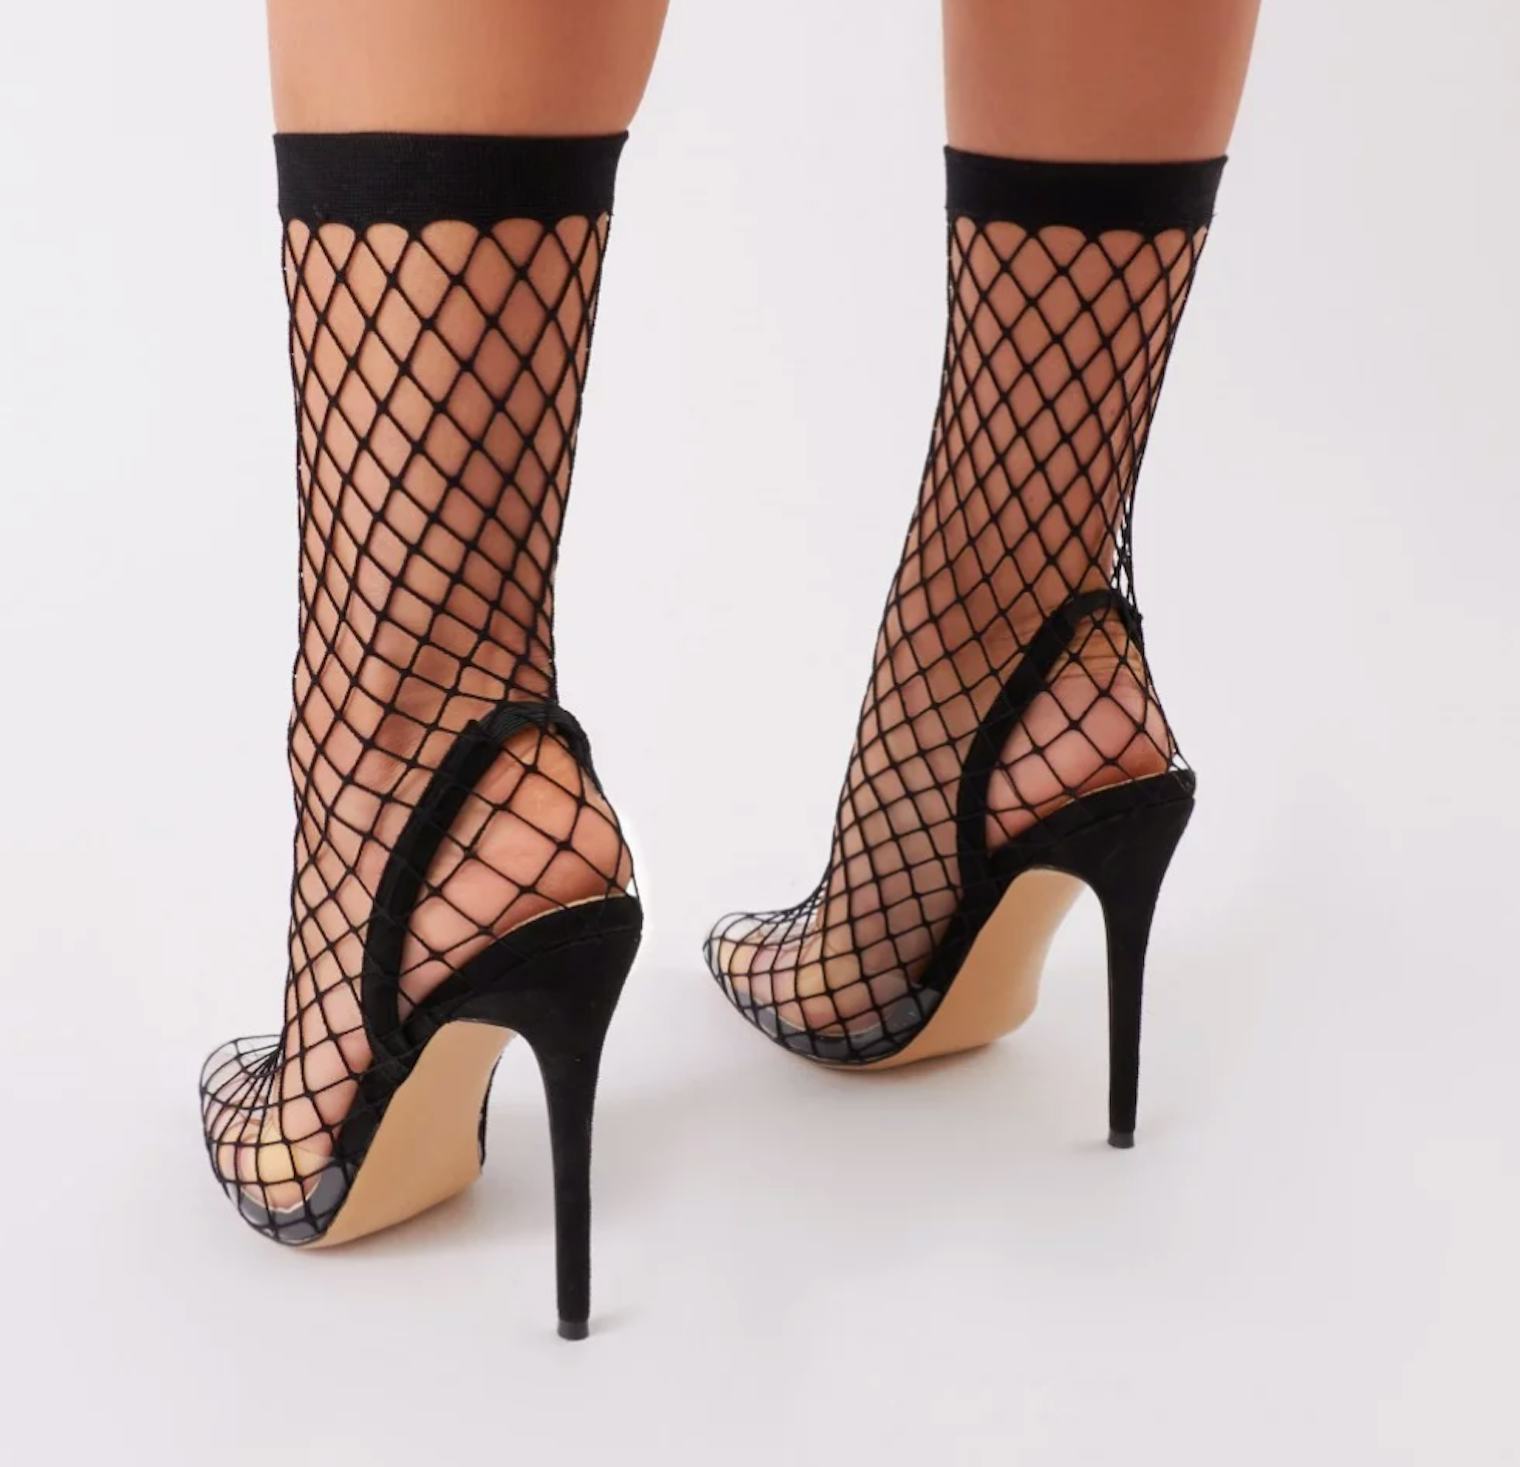 Where To Buy Kylie Jenner's Naked Black Fishnet Heels For Only $50